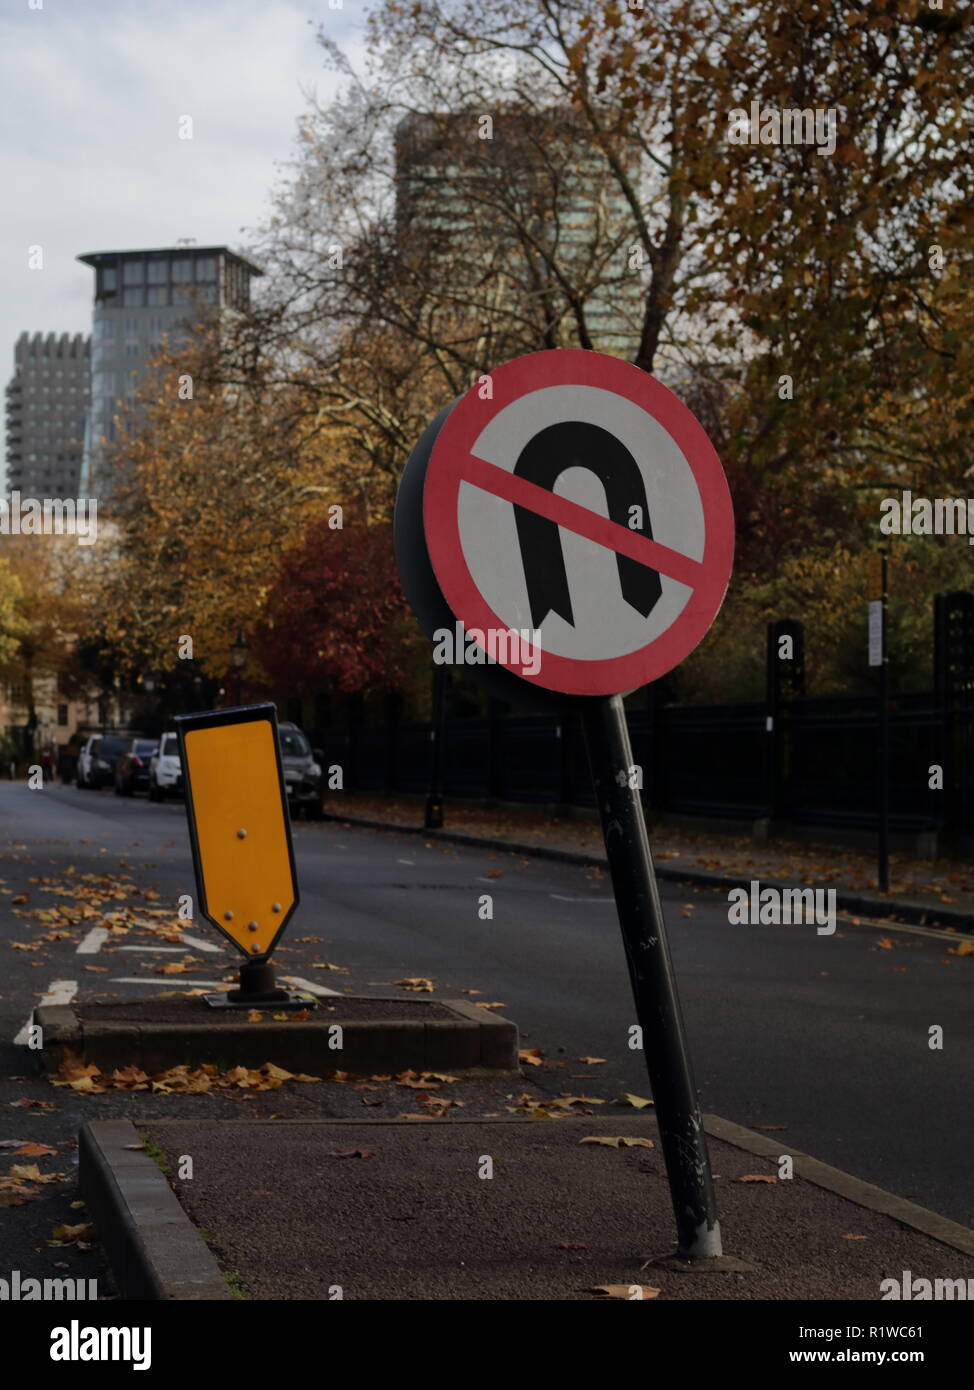 Reverse sign in London street near Regents park in Autumn. No U-turns sign. Stock Photo